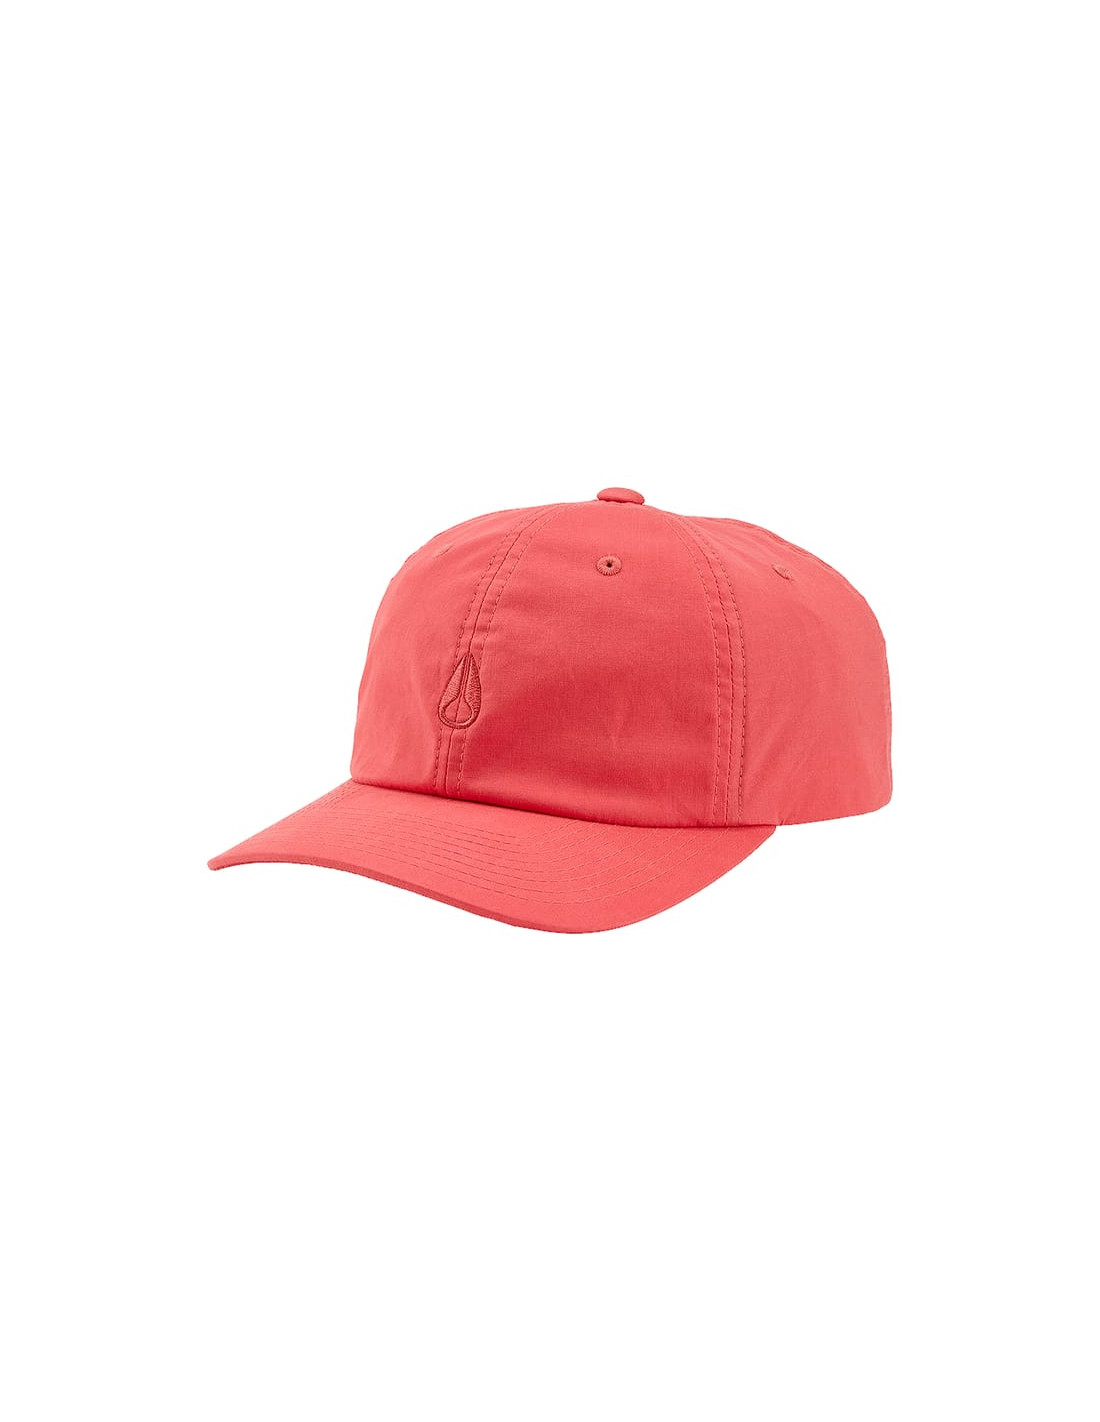 AGENT STRAPBACK HAT